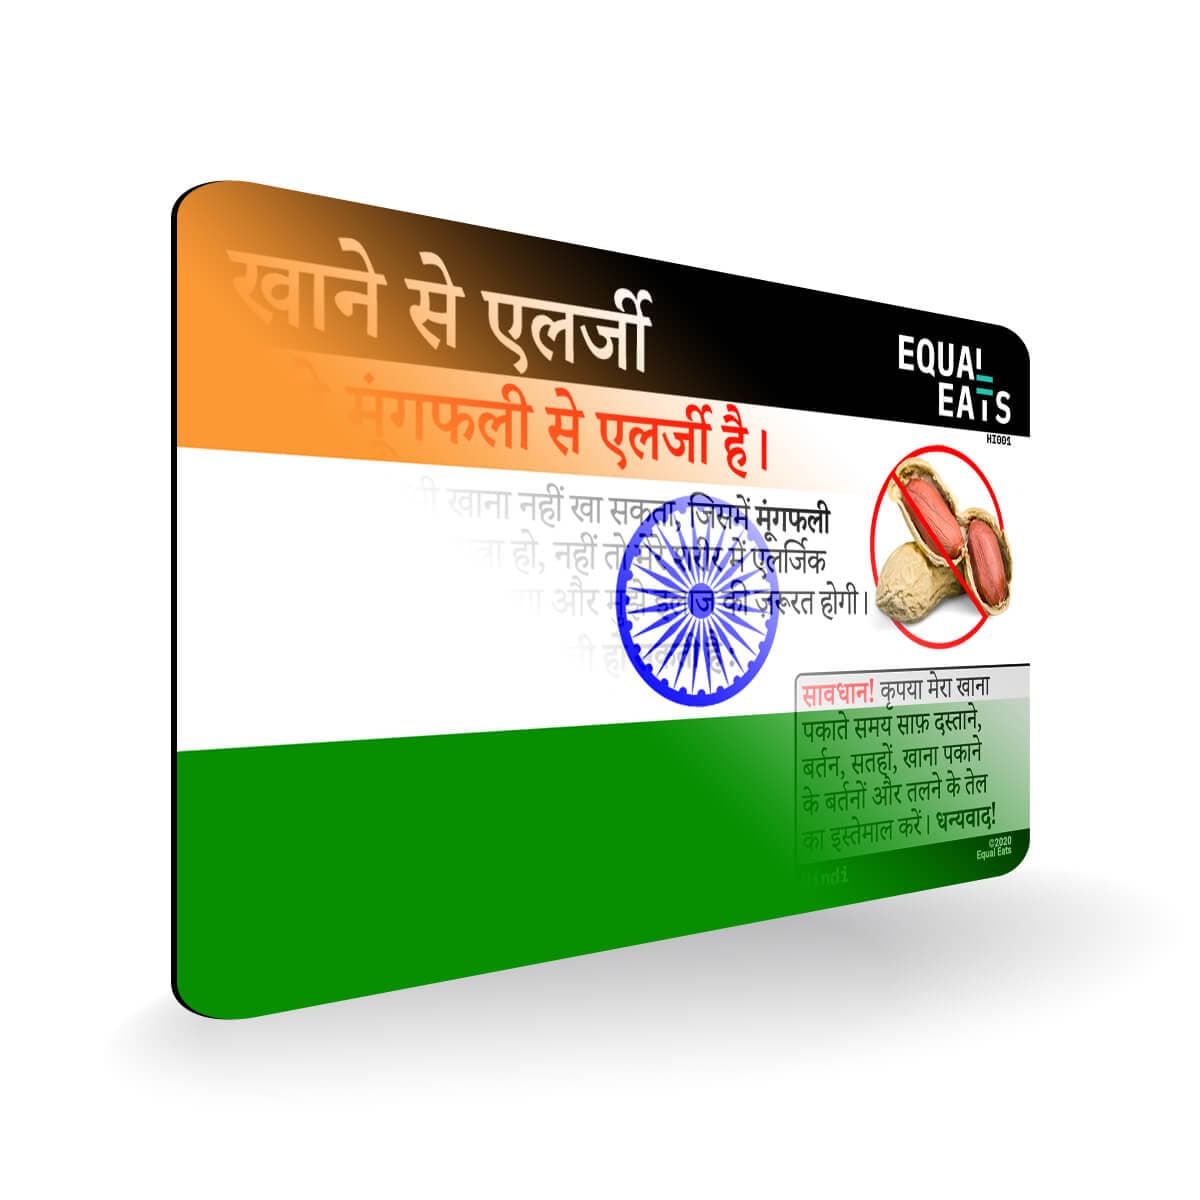 Peanut in Hindi, Peanut Allergy Card in Hindi